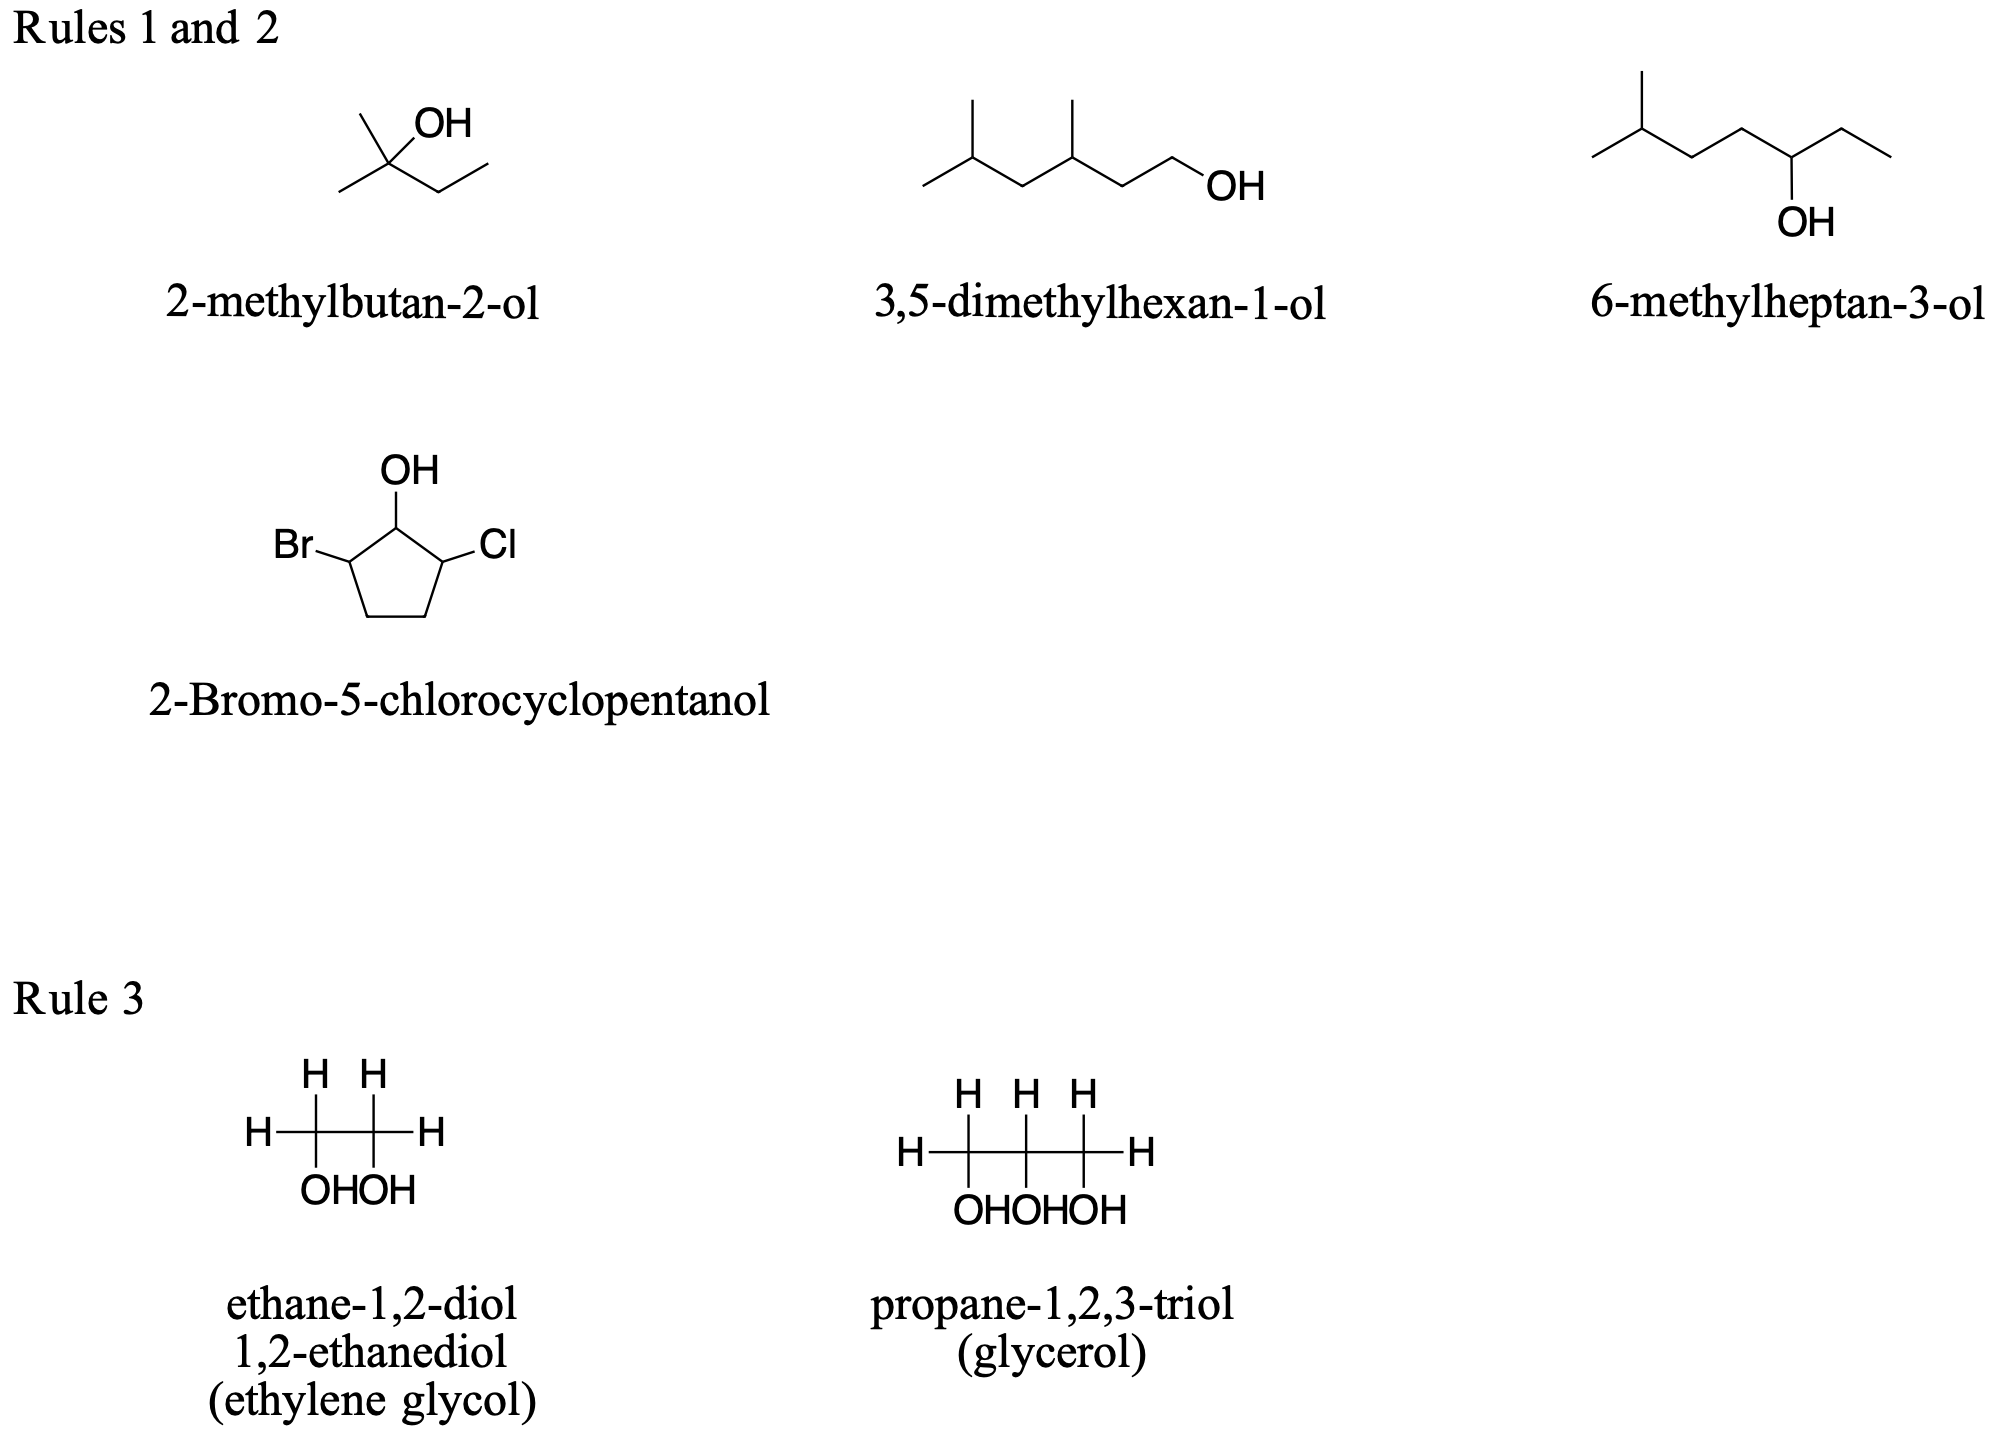 Structures of 2 methylbutan-2-ol, 3 5-dimethylhexan-1-ol, 6 methylheptan-3-ol, 2 bromo 5 chlorocyclopentanol are shown to highlight rules 1 and 2. 1 2 ethanediol and propane 1 2 3 triol are shown to highlight rule 3